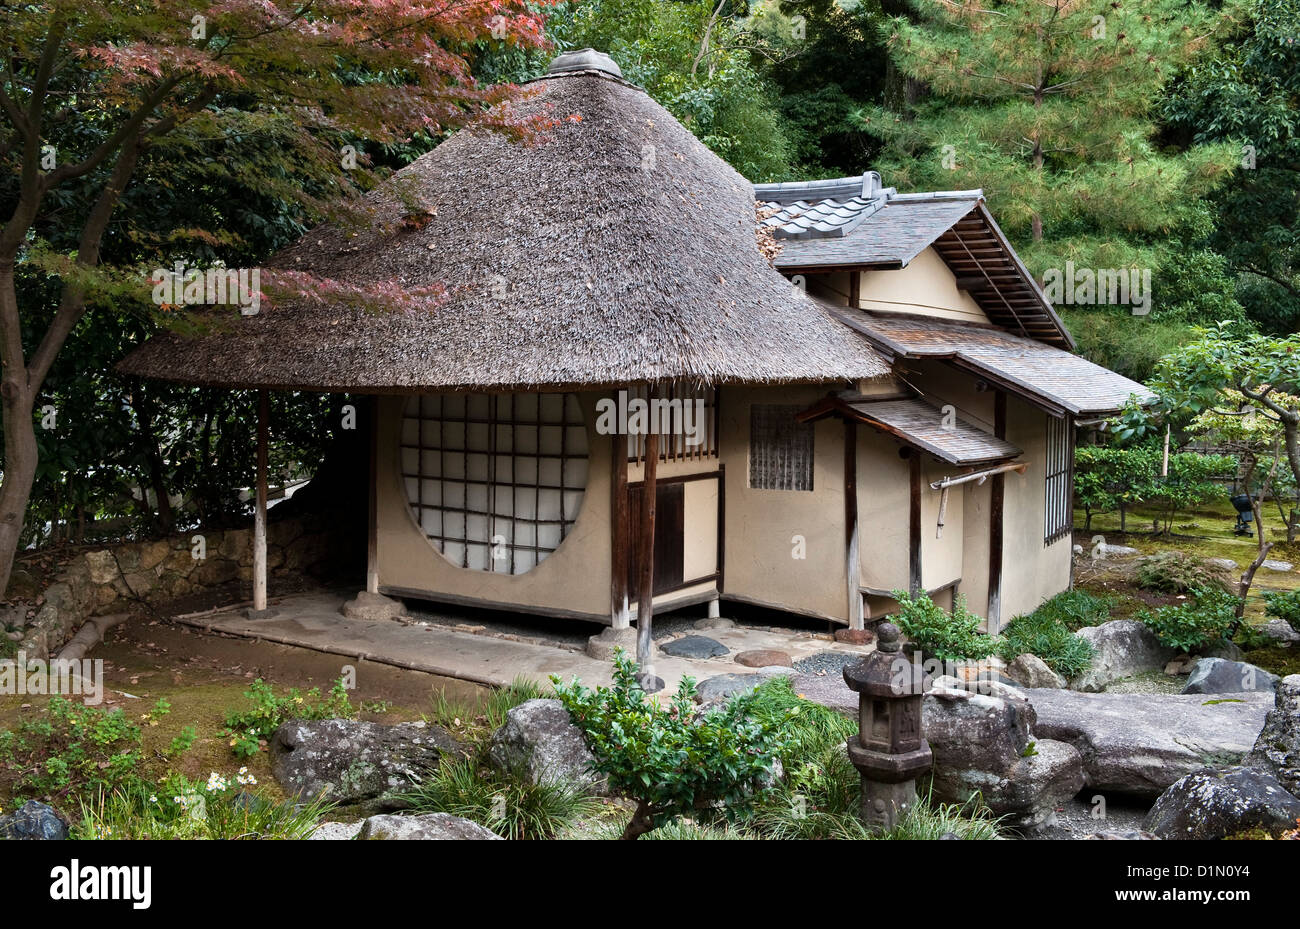 The Onigawara-seki teahouse, one of the four famous teahouses found at the Zen Buddhist temple of Kodai-ji, Kyoto, Japan Stock Photo